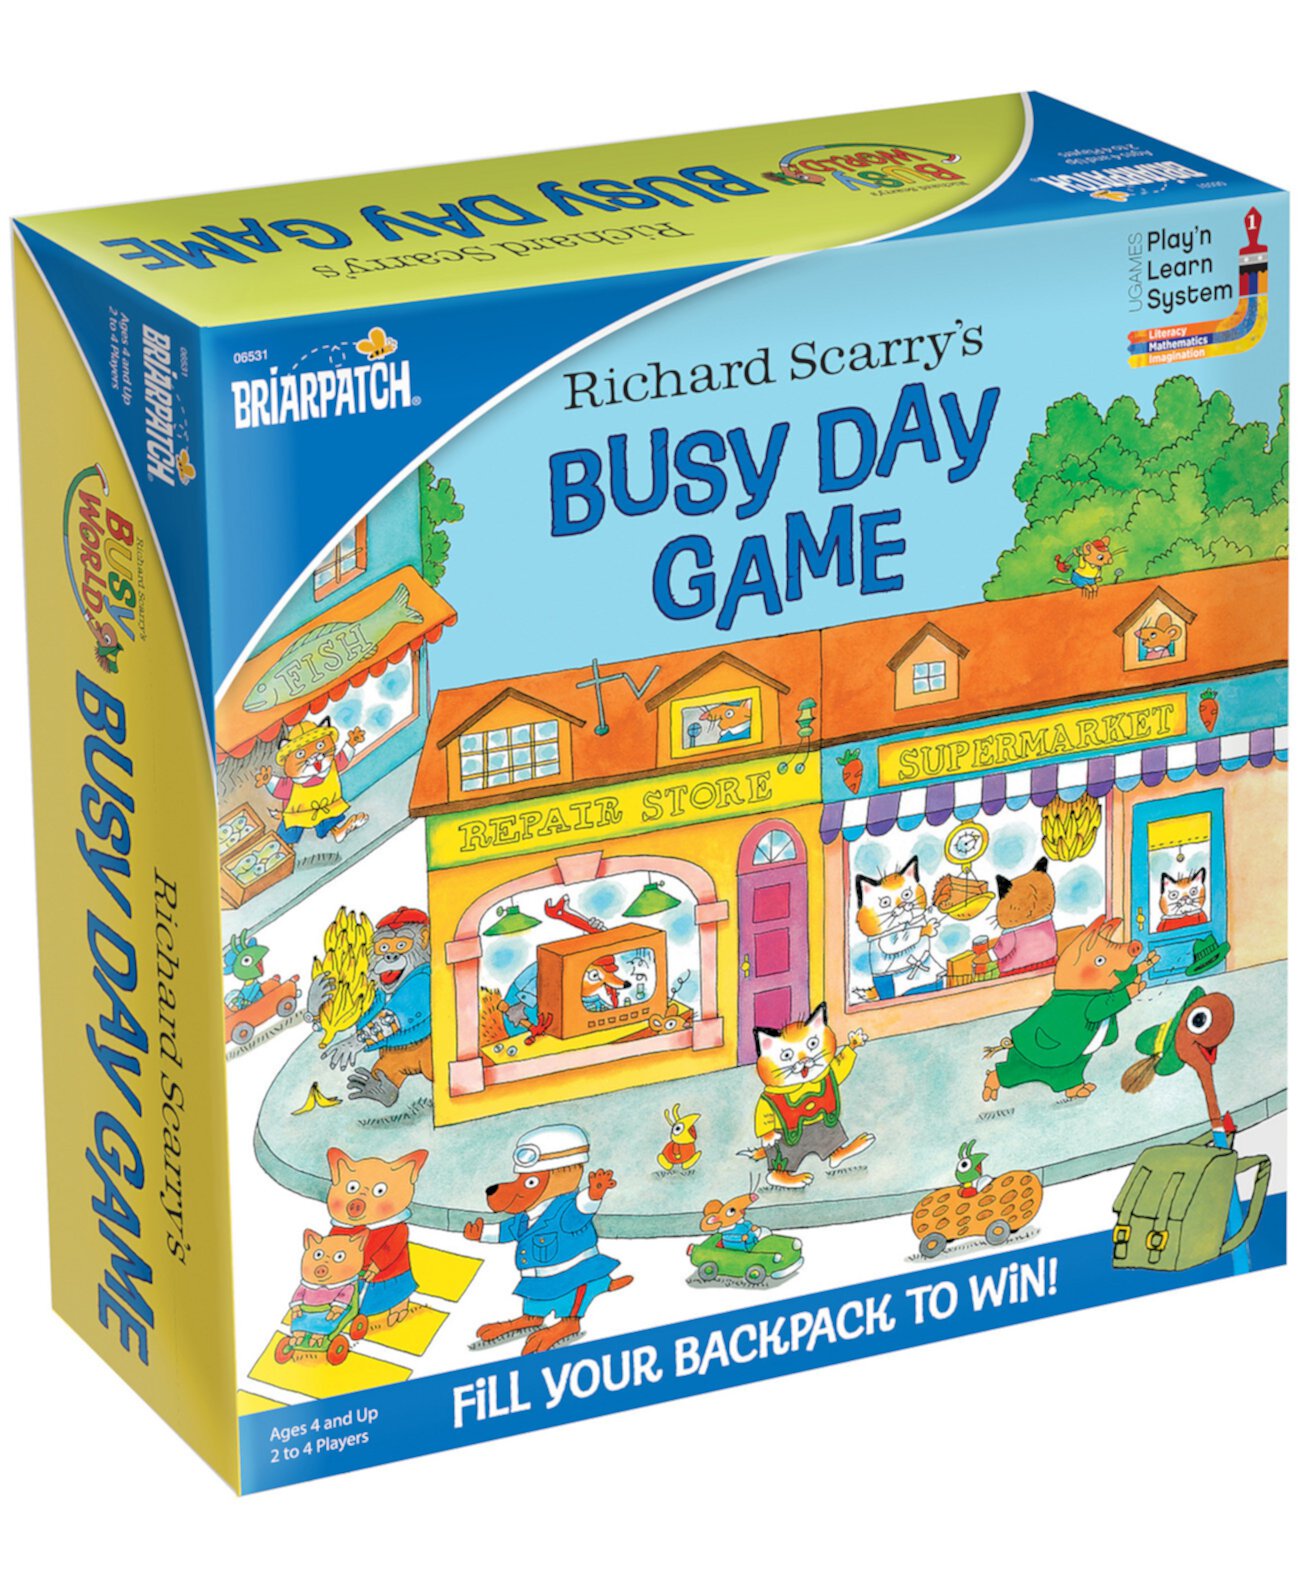 Игровой набор Richard Scarry's Busy Day, 28 предметов Briarpatch